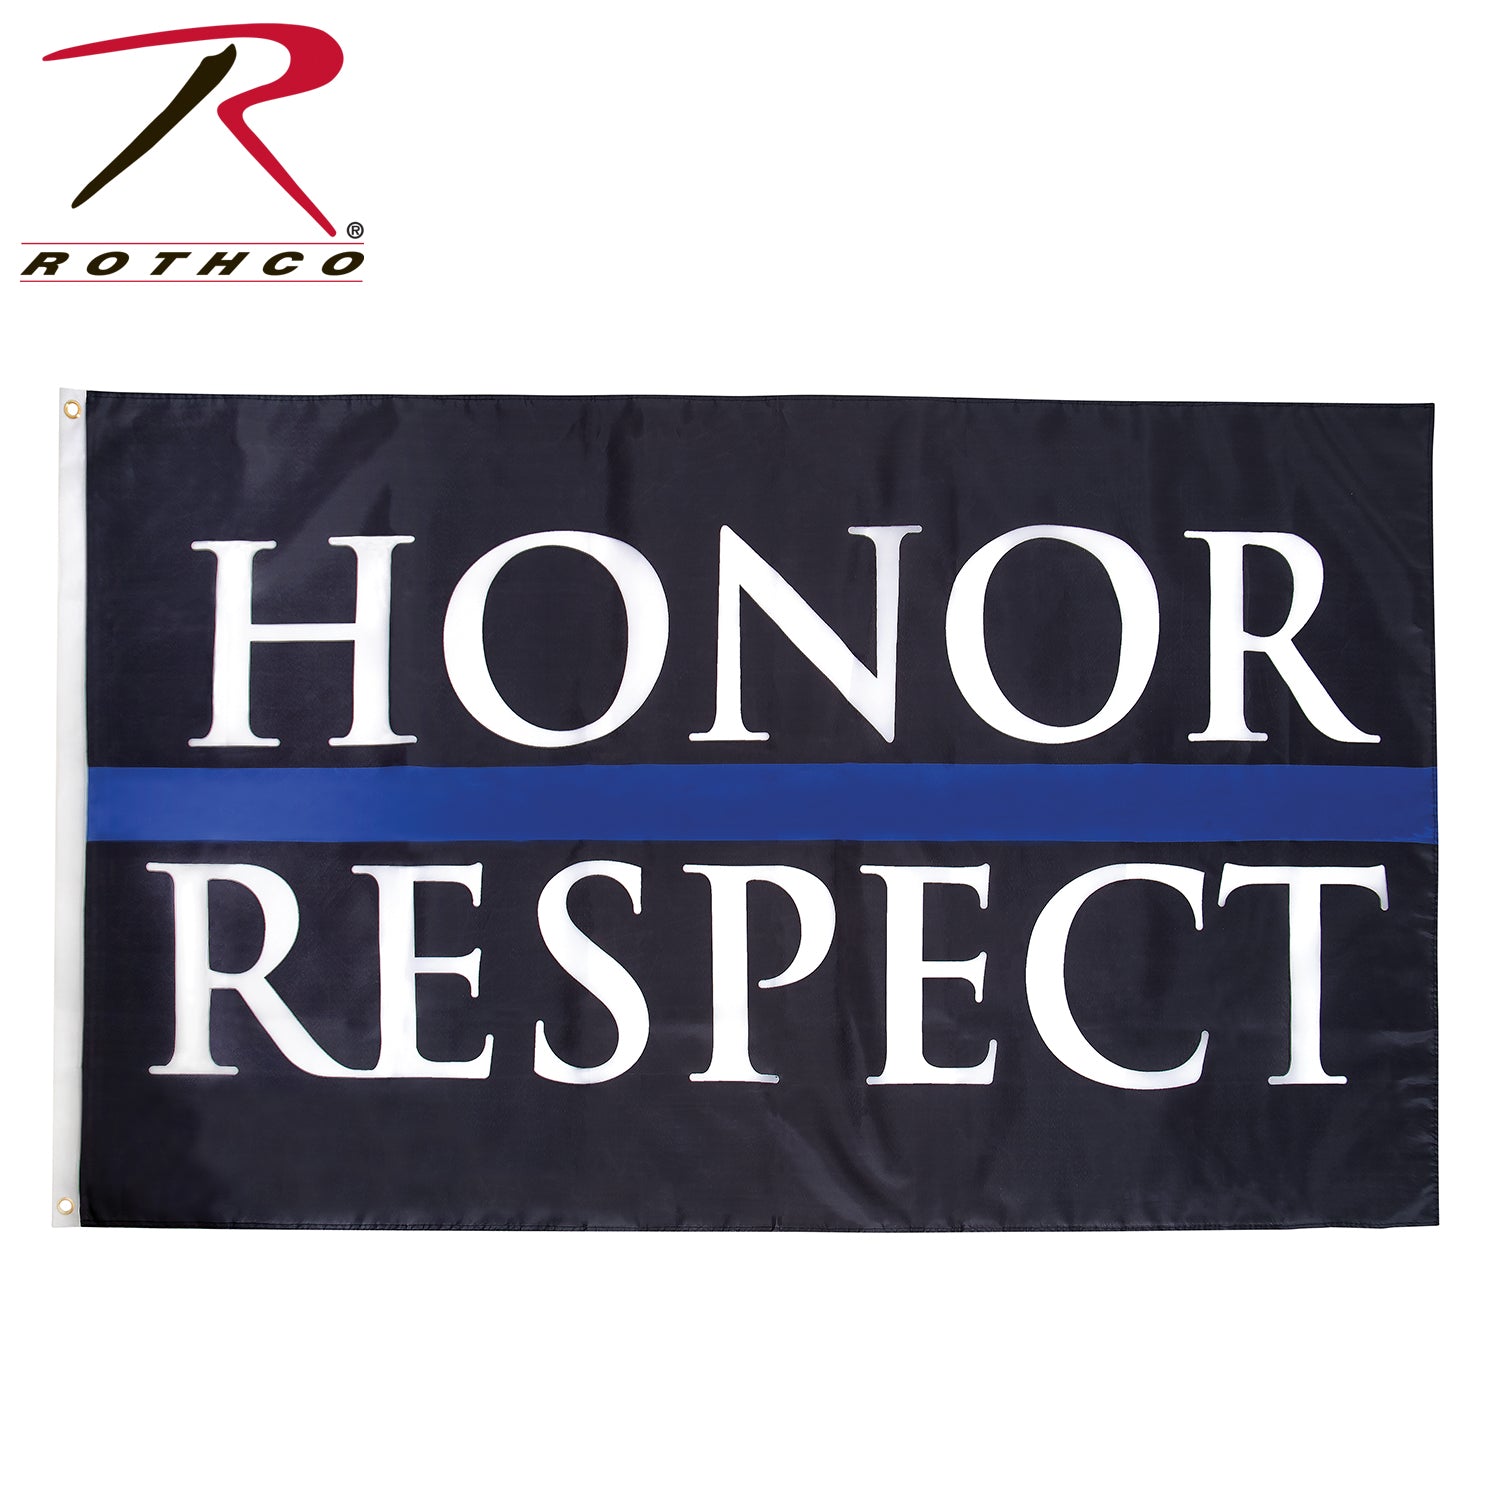 Rothco Honor & Respect Thin Blue Line Flag 3x5